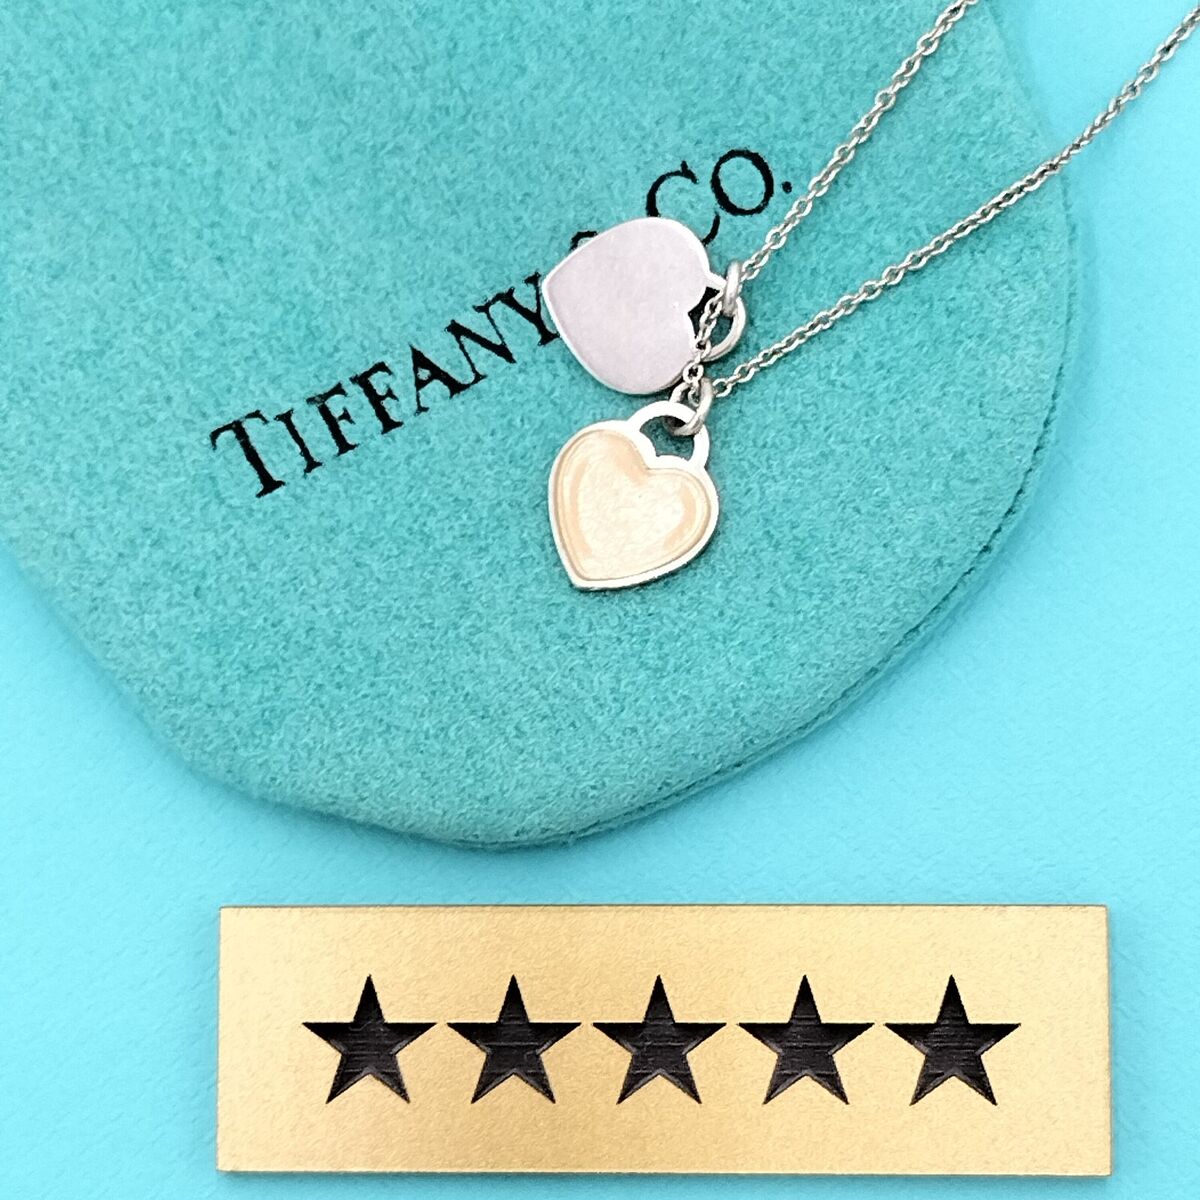 TIFFANY & Co. Platinum Diamond Pink Sapphire Heart Pendant Necklace $3,300  | eBay